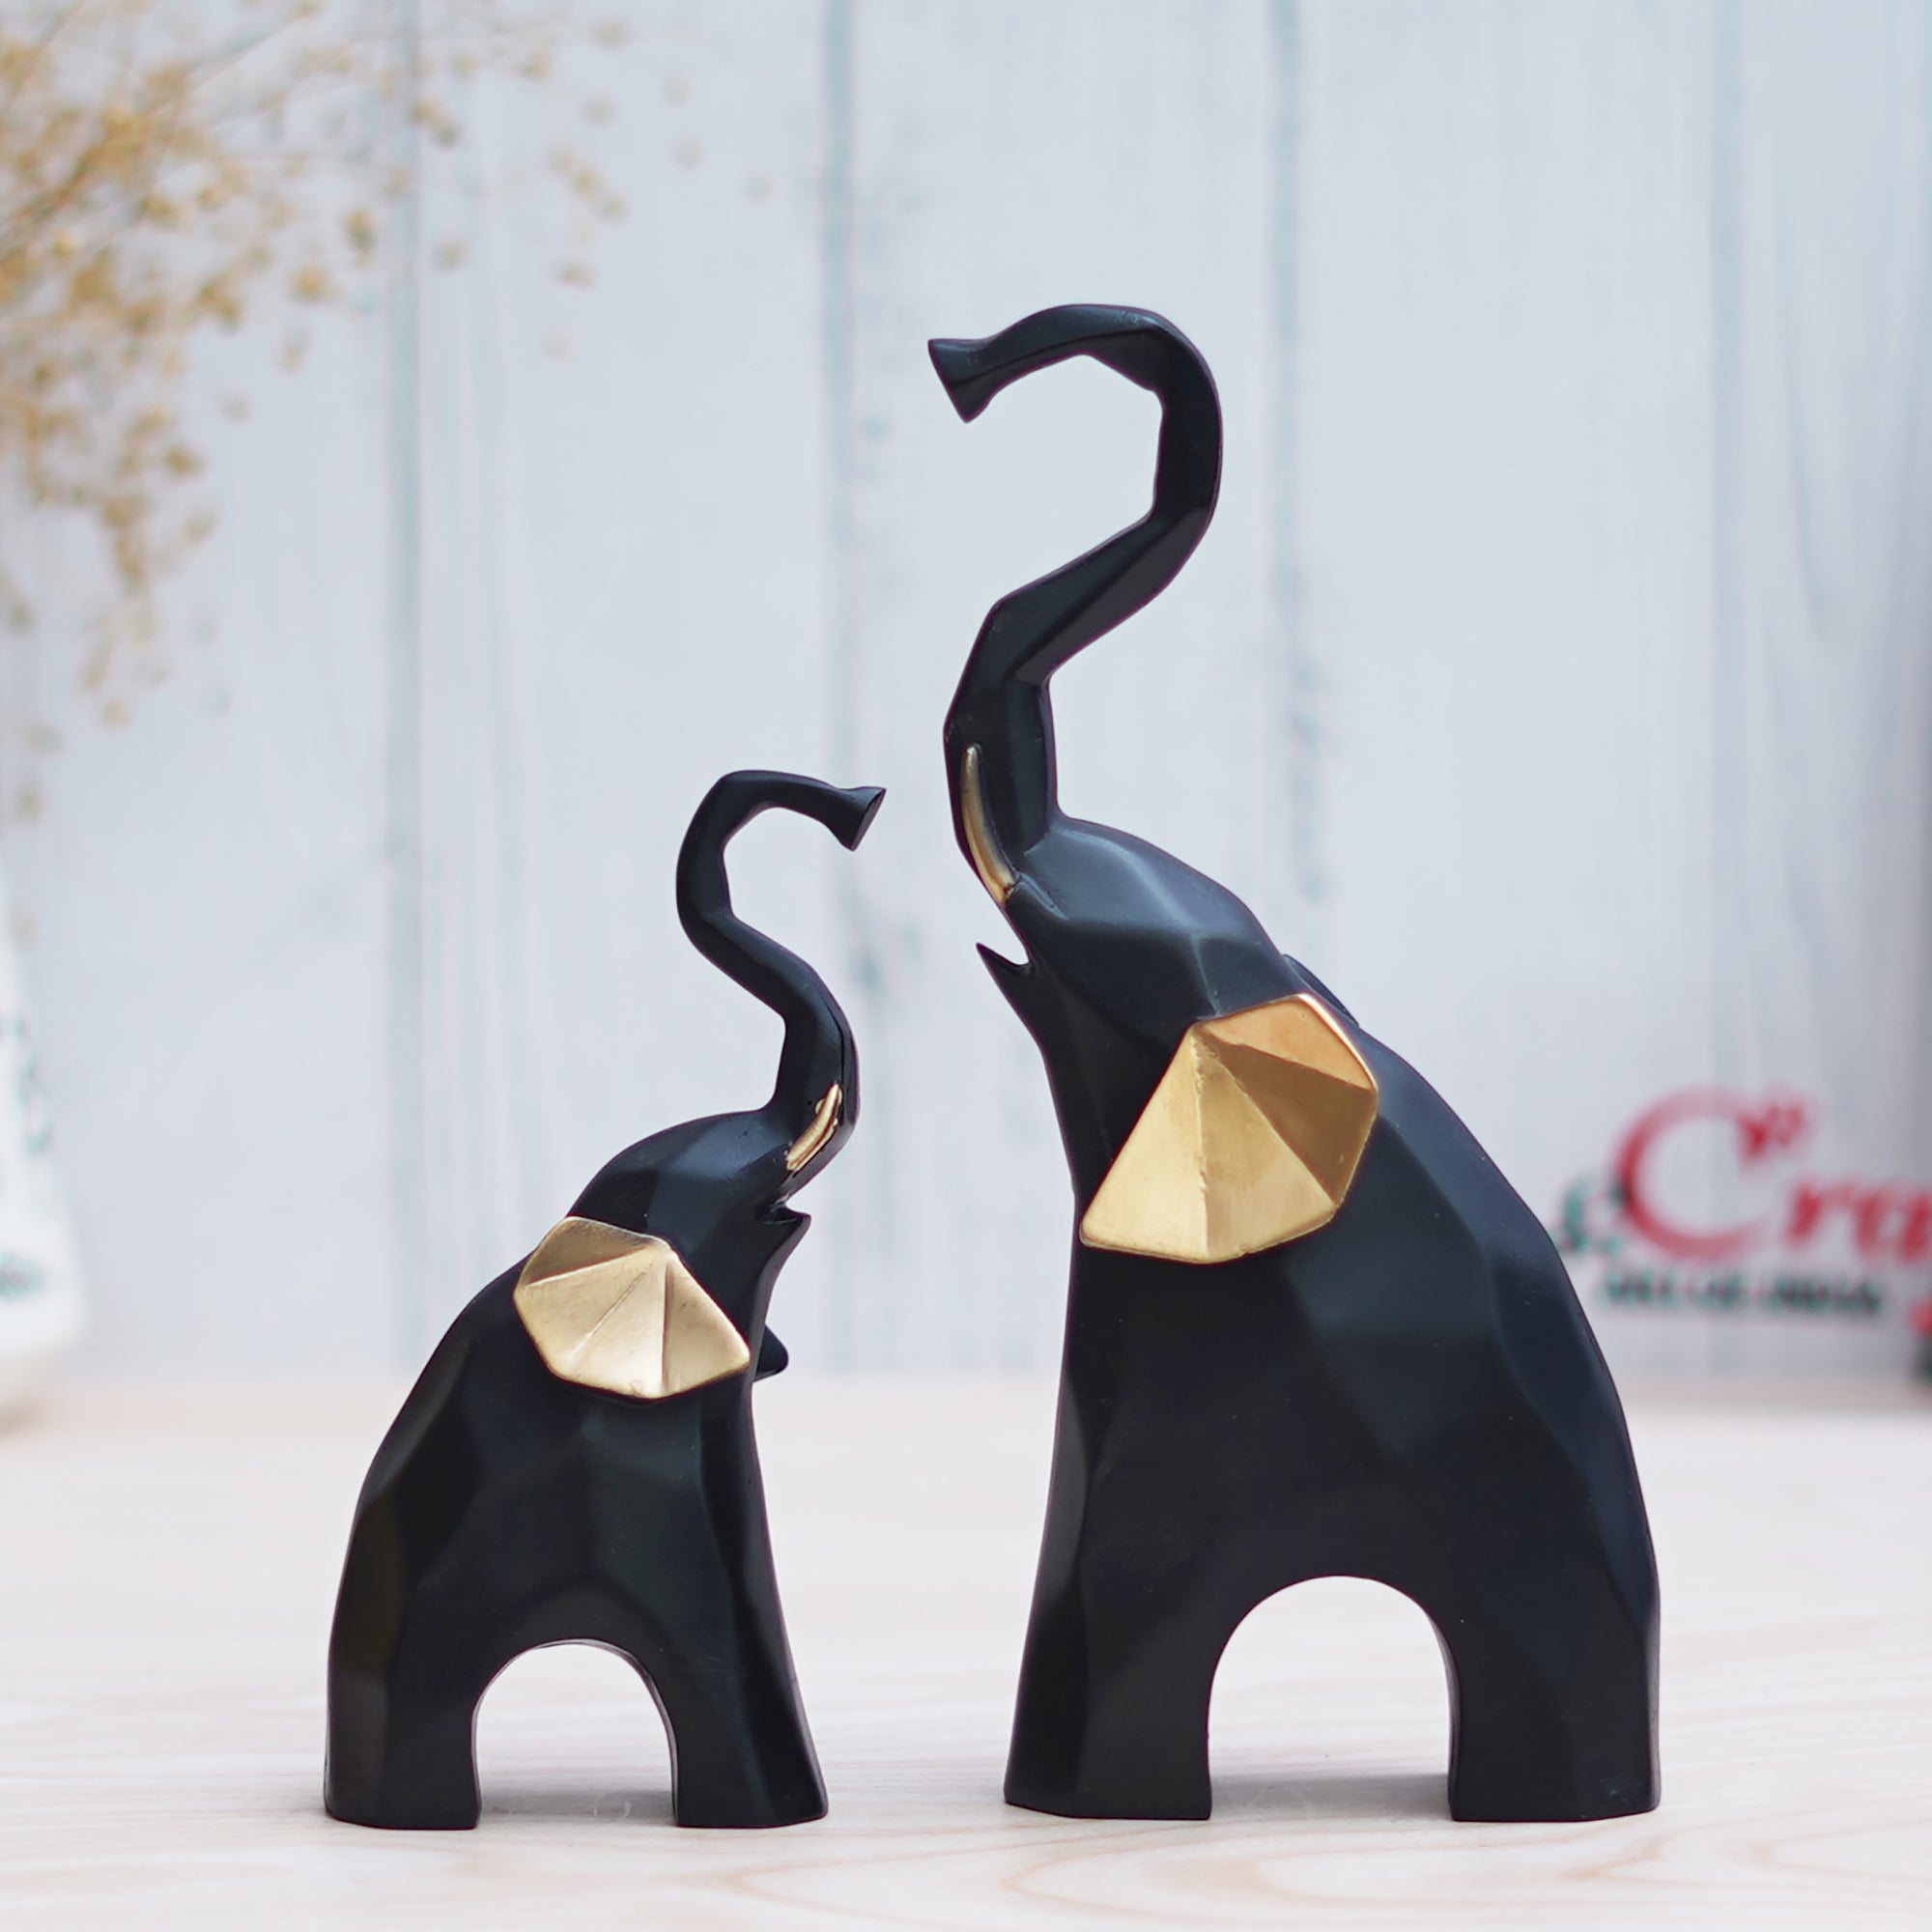 Set of 2 Gold & Black Elephant Statues Decorative Animal Showpieces